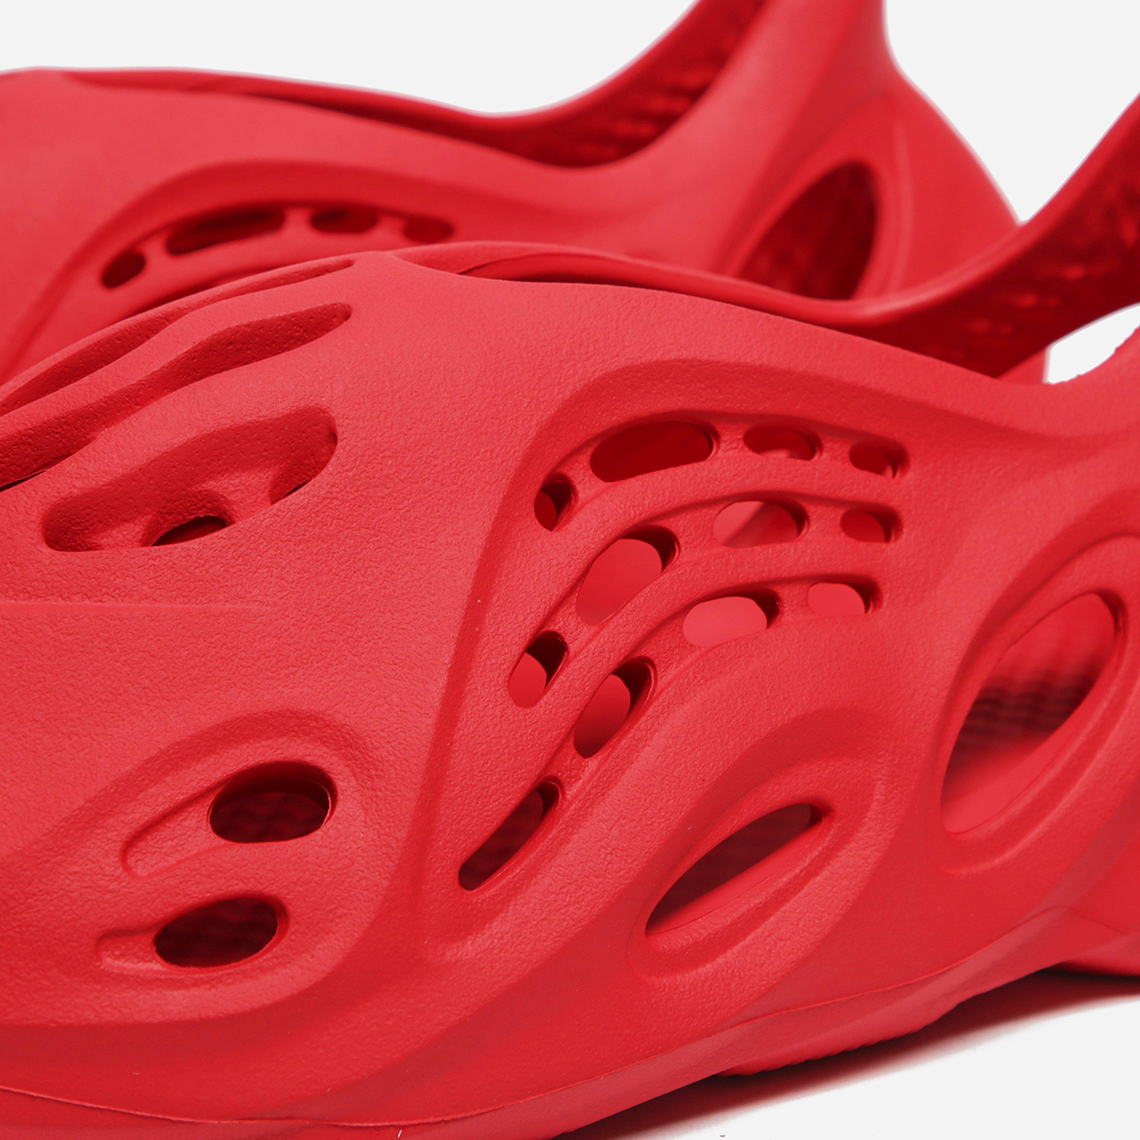 adidas YEEZY vermilion foam runner Foam Runner Vermillion Red GW3355 | SneakerNews.com